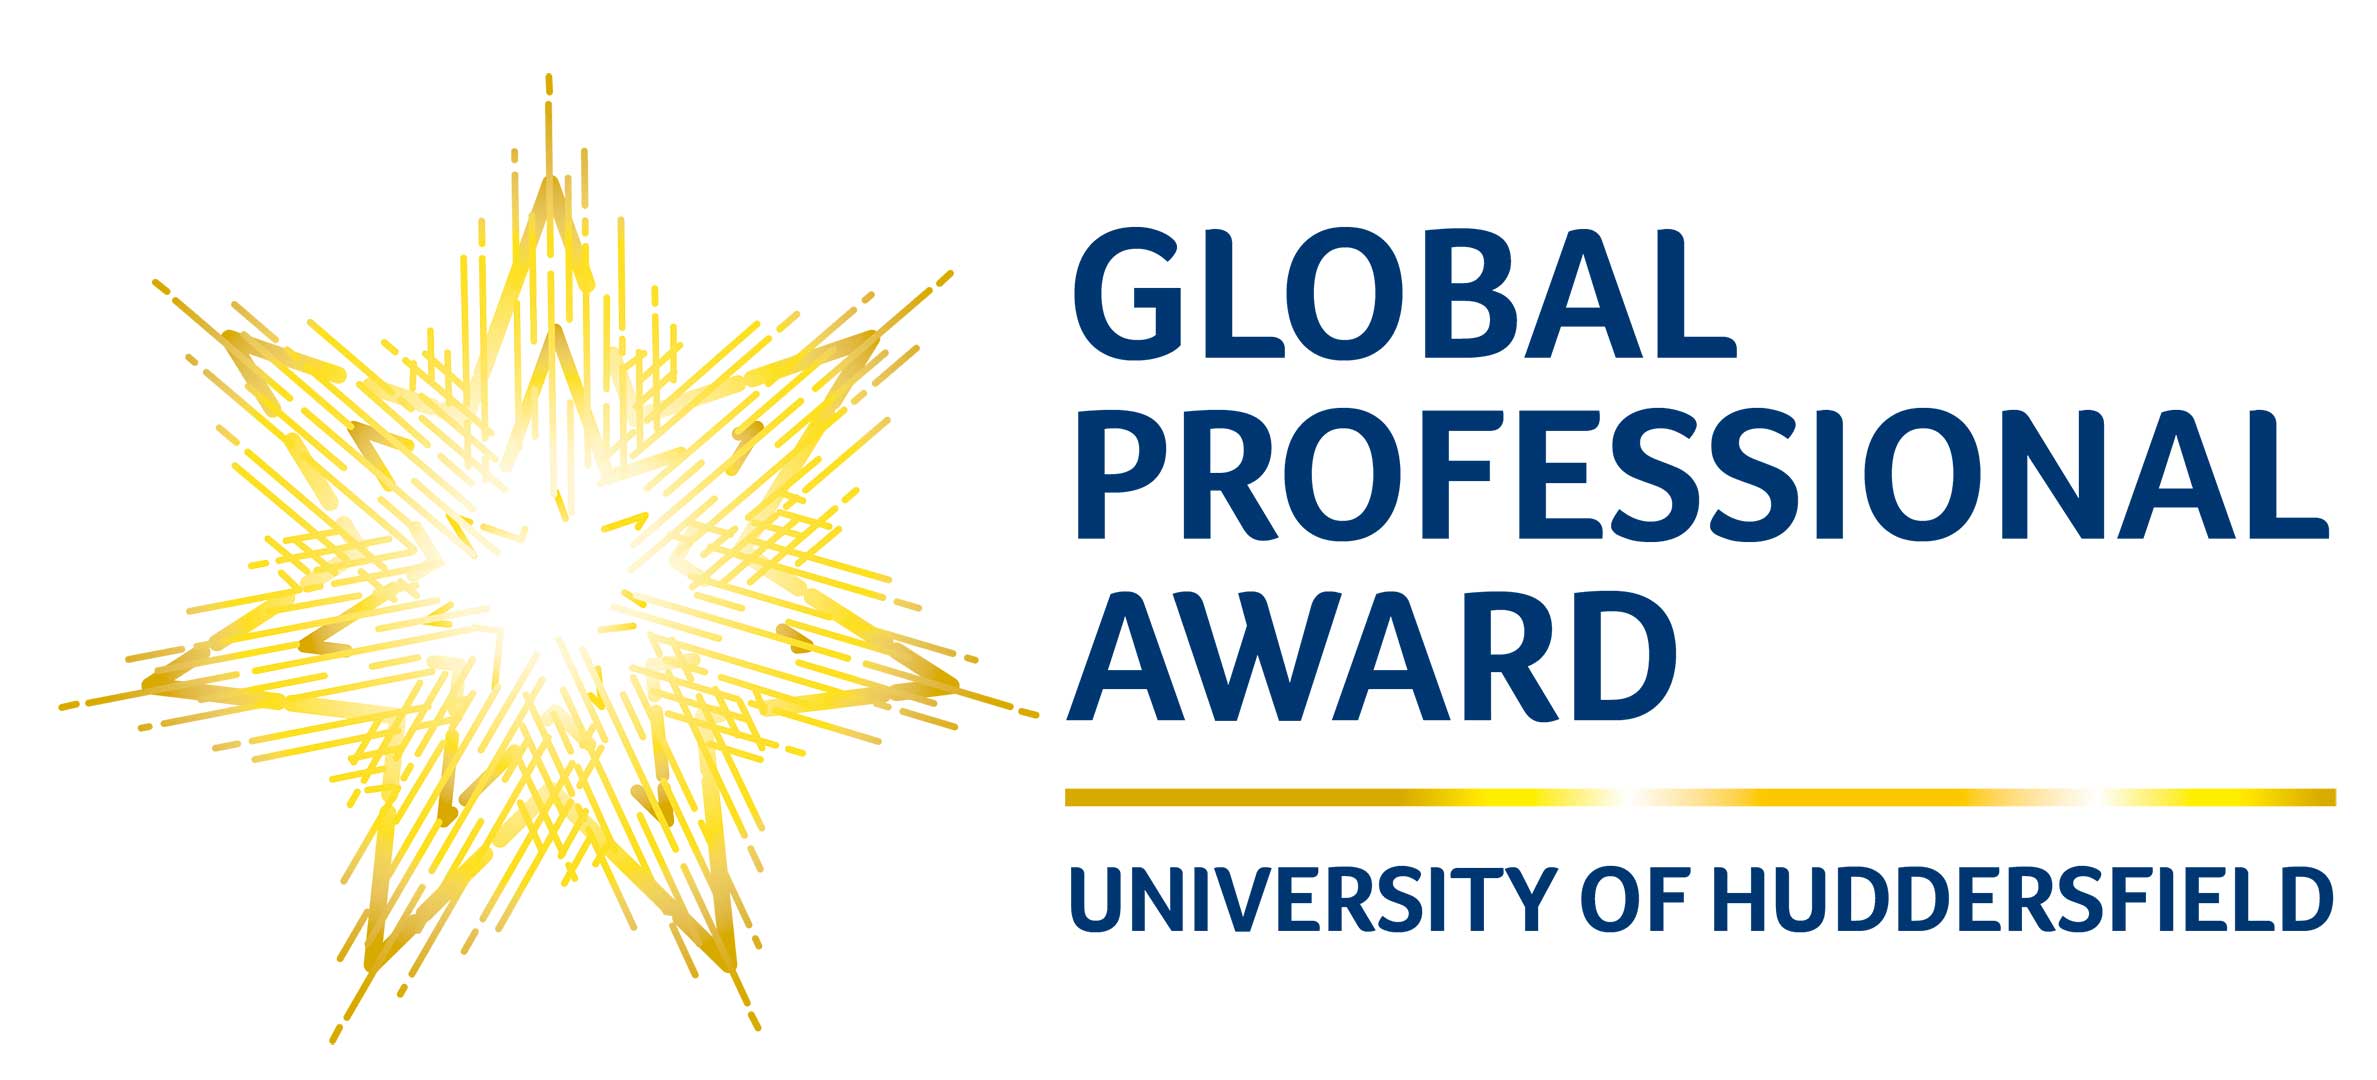 Global Professional Award